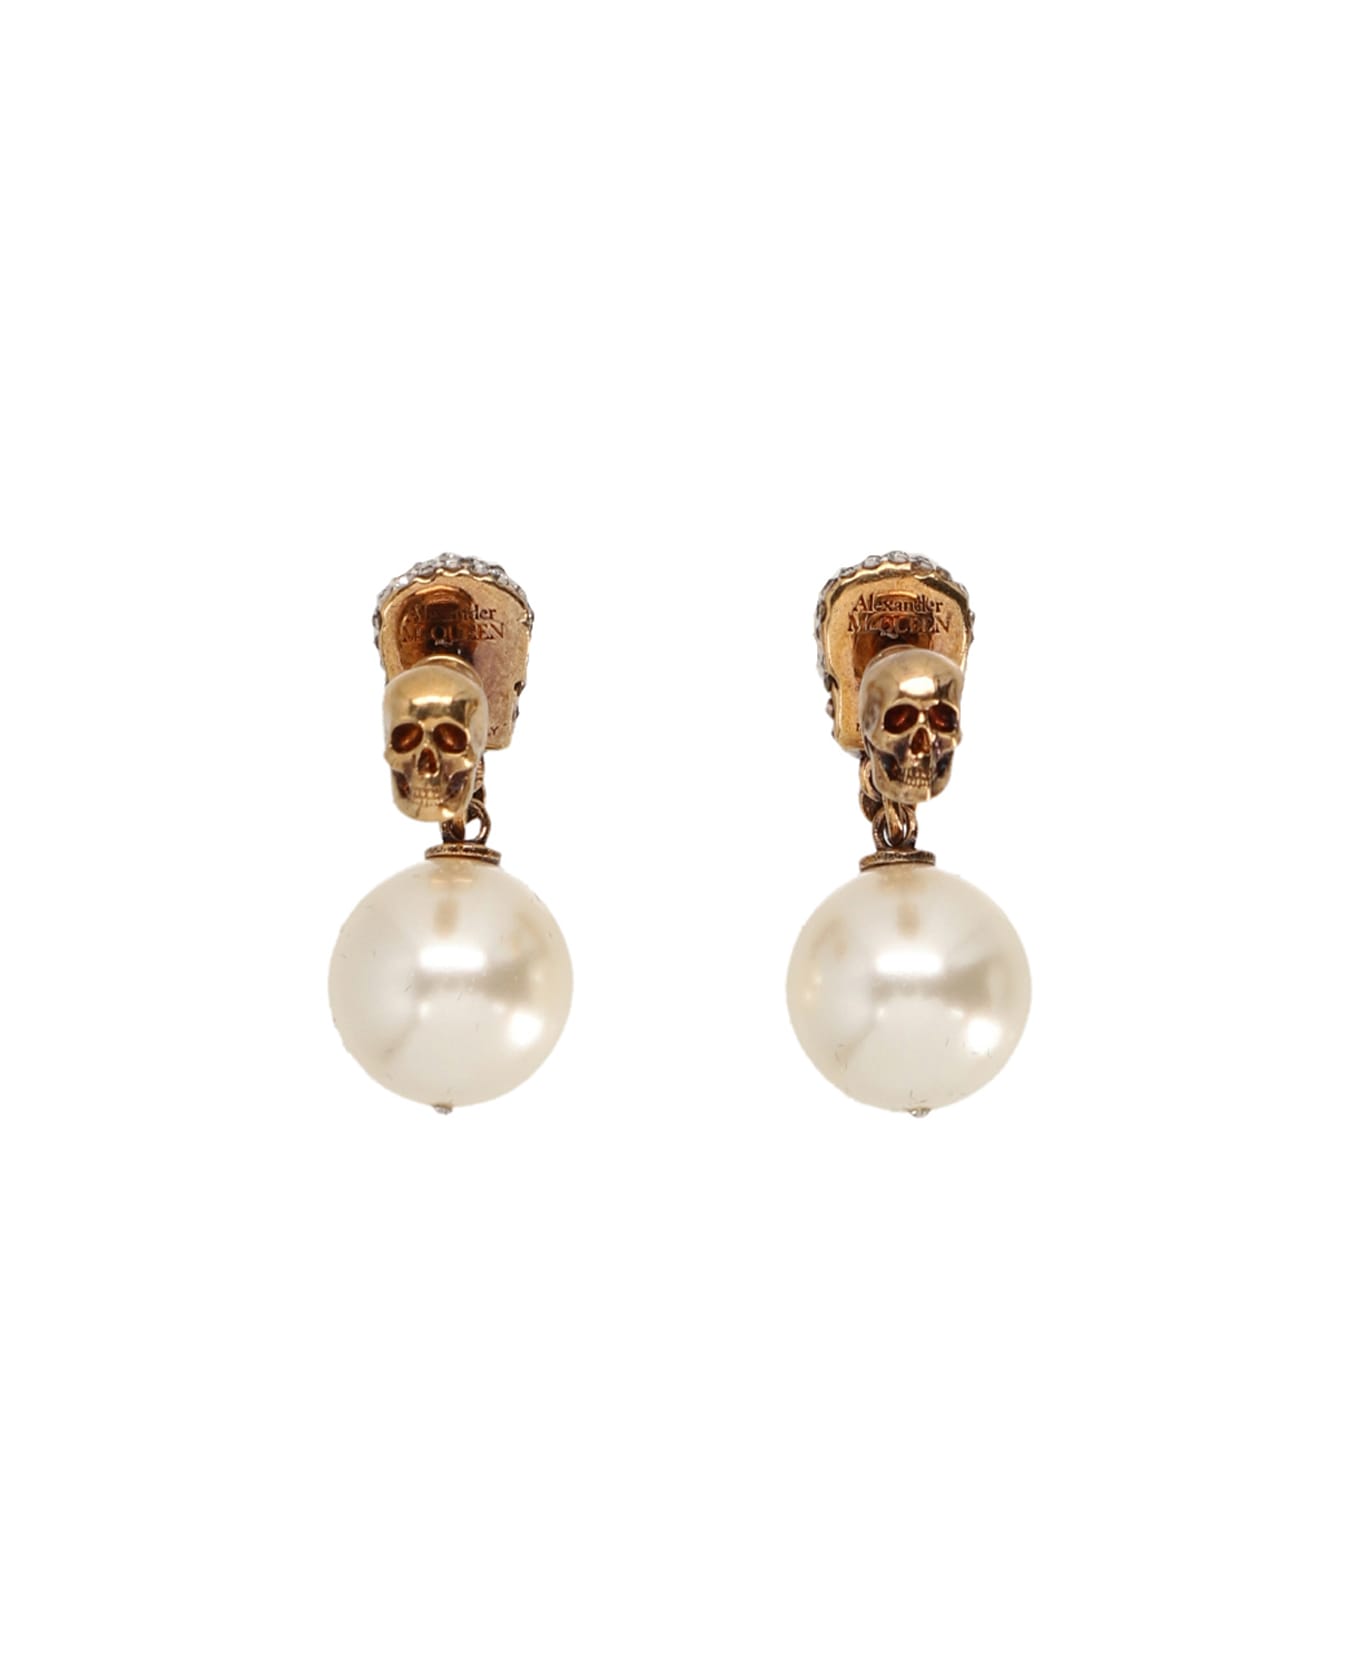 Alexander McQueen Pearl Skull Earrings In Antiqued Gold - Gold イヤリング